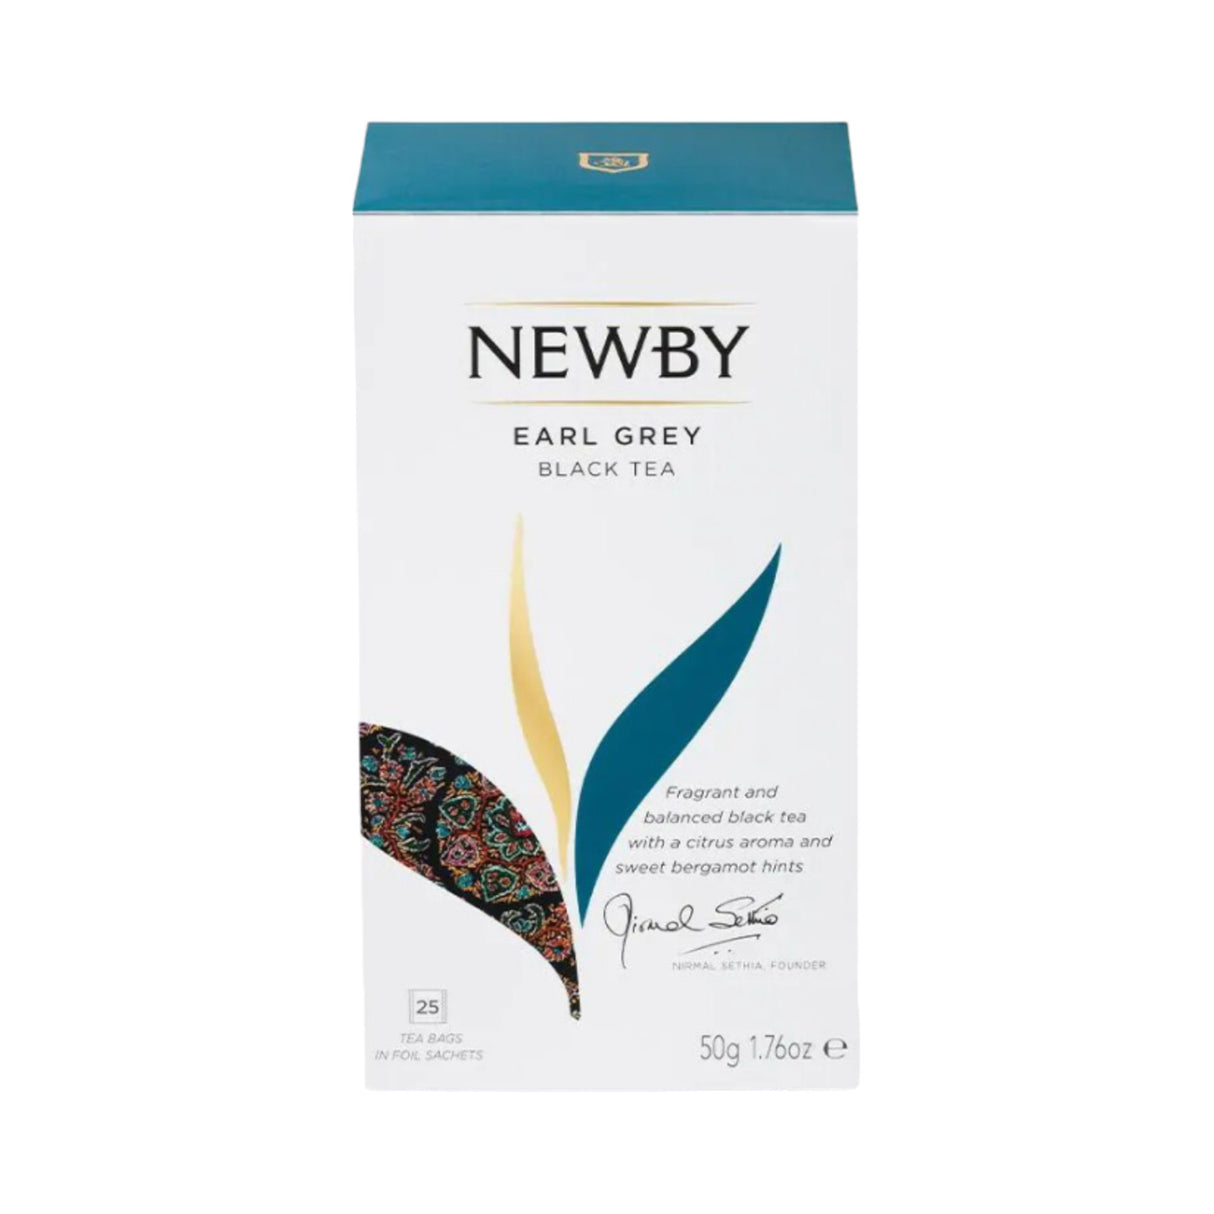 Newby Teas - EARL GREY Teabags 25 Count